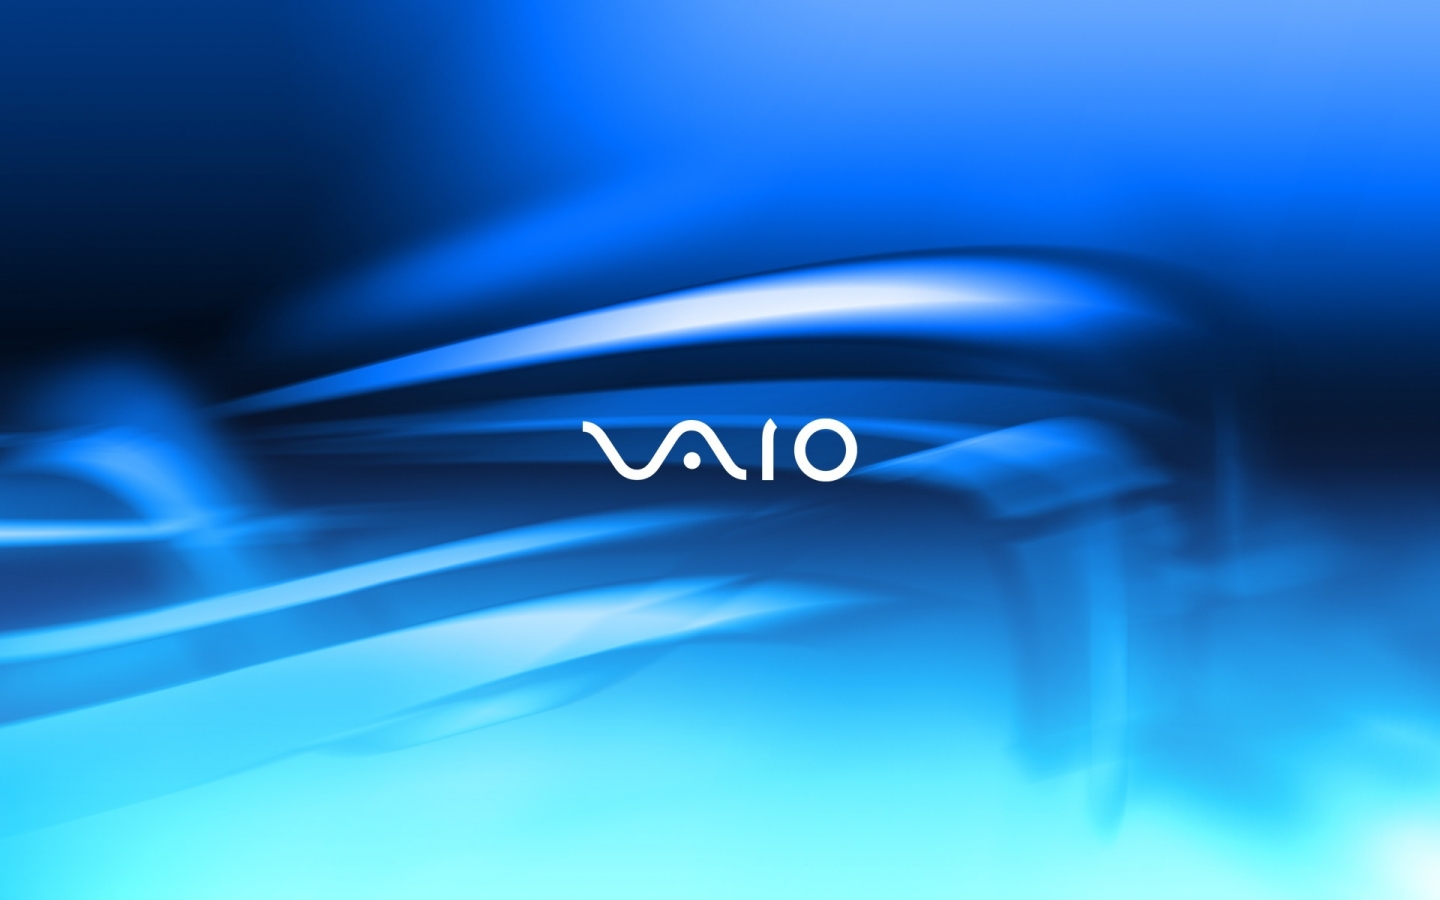 Vaio light blue for 1440 x 900 widescreen resolution